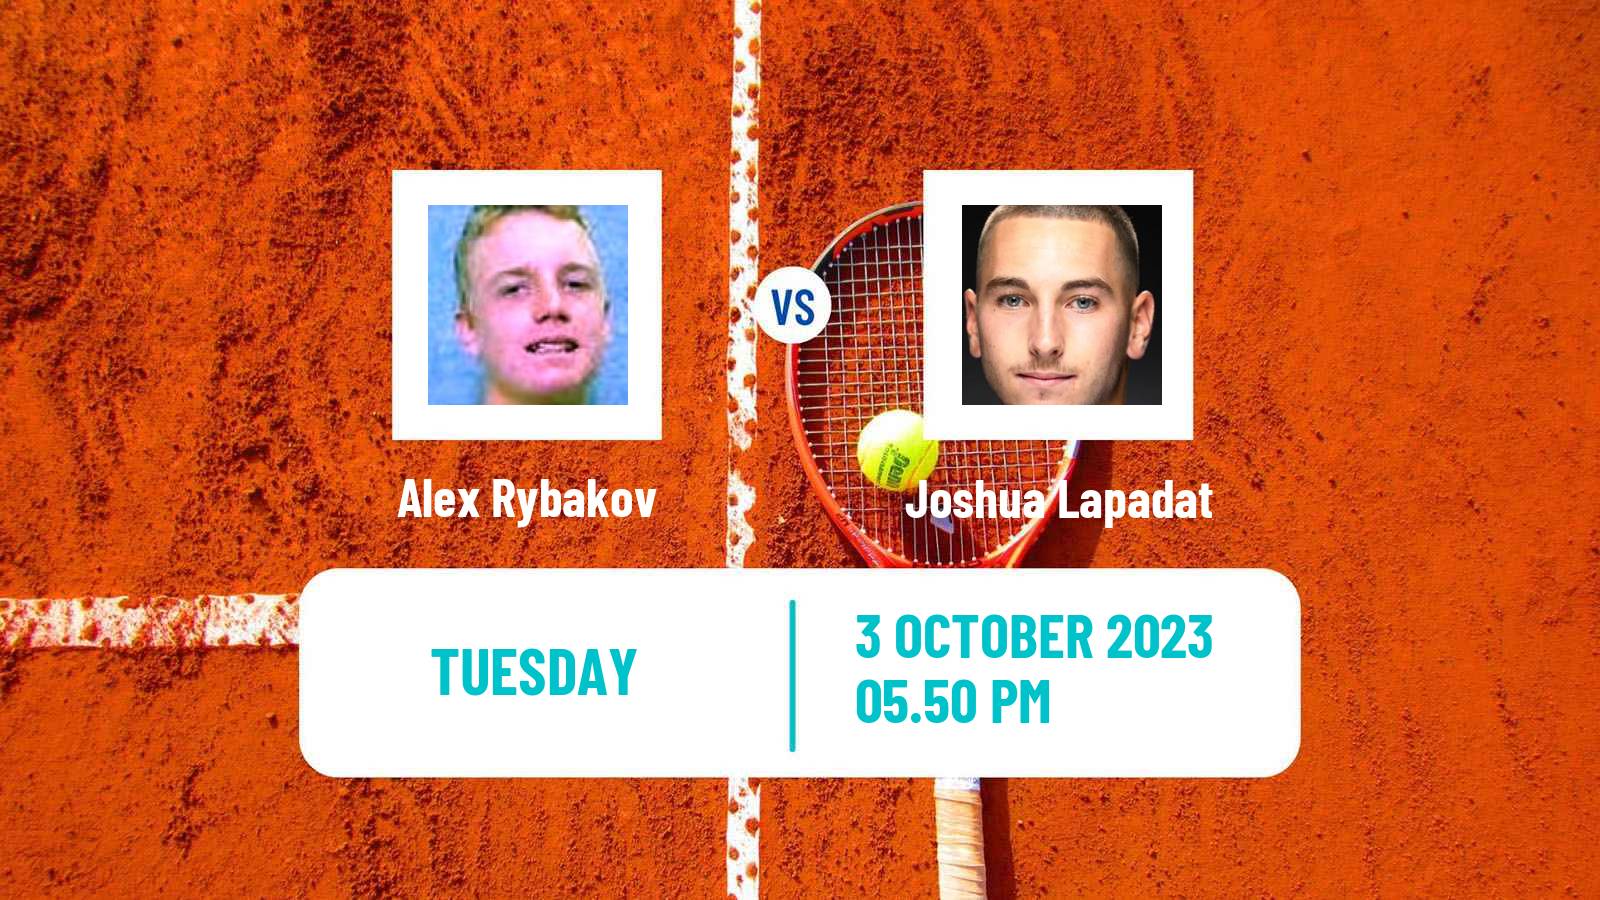 Tennis ITF M15 Ithaca Ny 2 Men Alex Rybakov - Joshua Lapadat